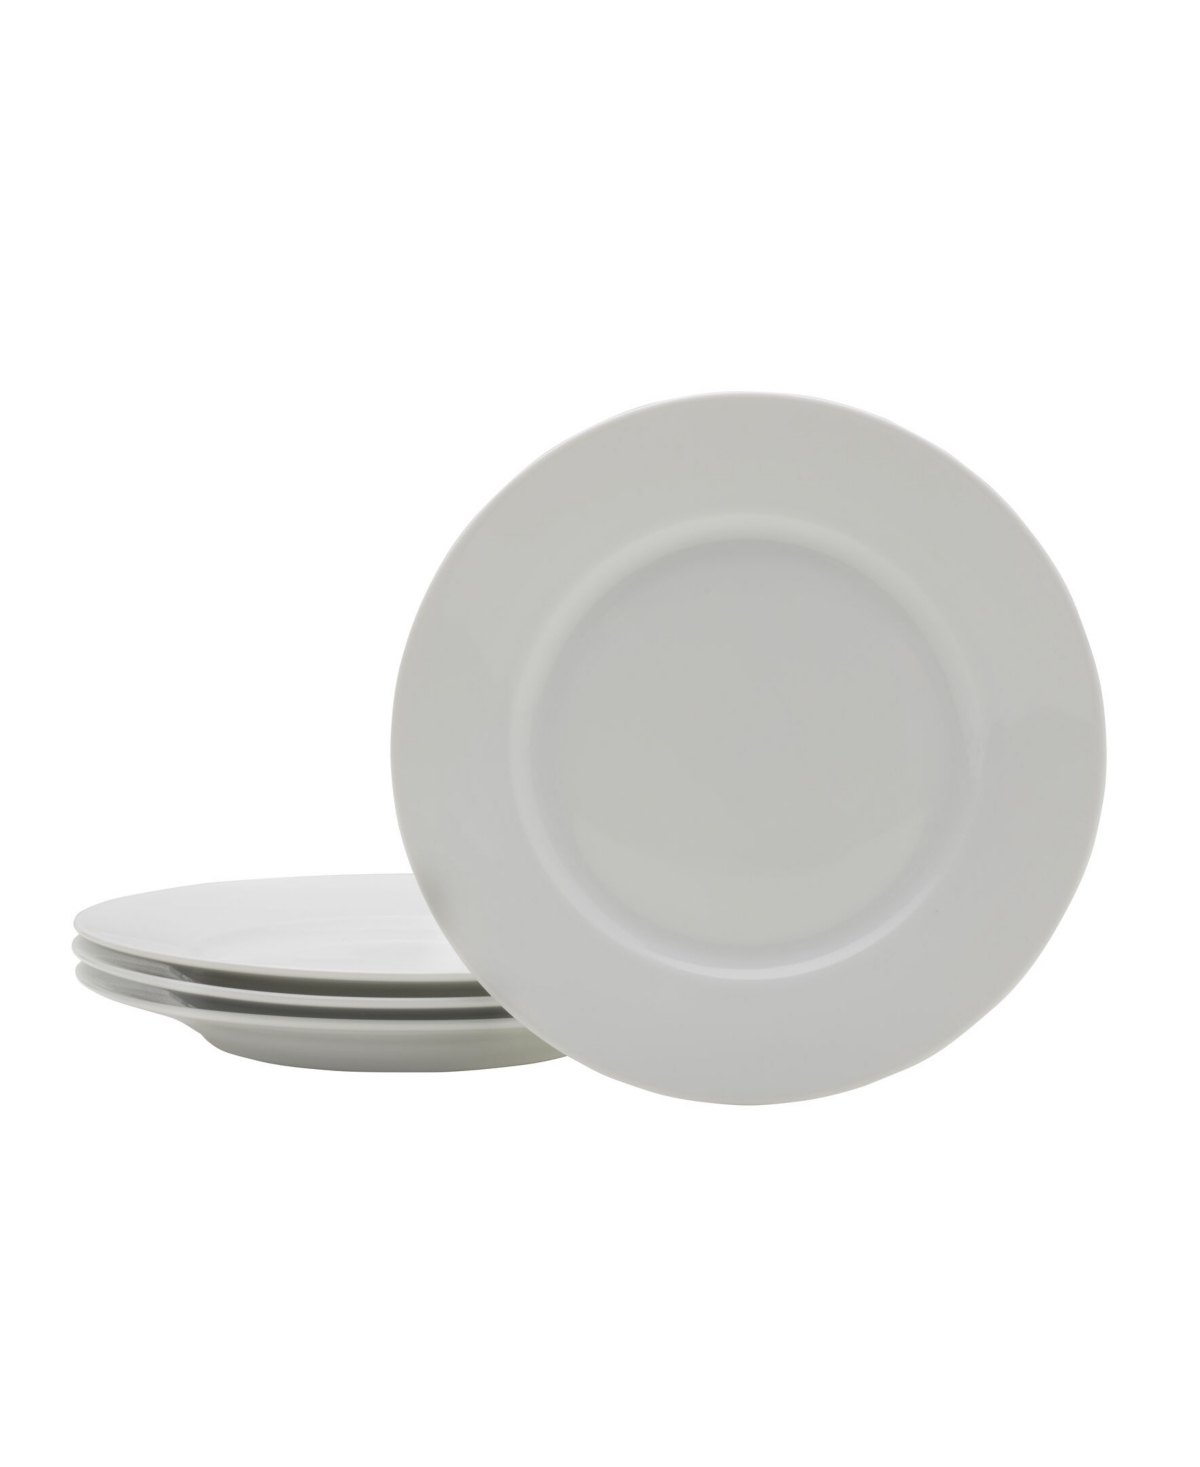 Everyday Whiteware Classic Rim Salad Plate 4 Piece Set - White